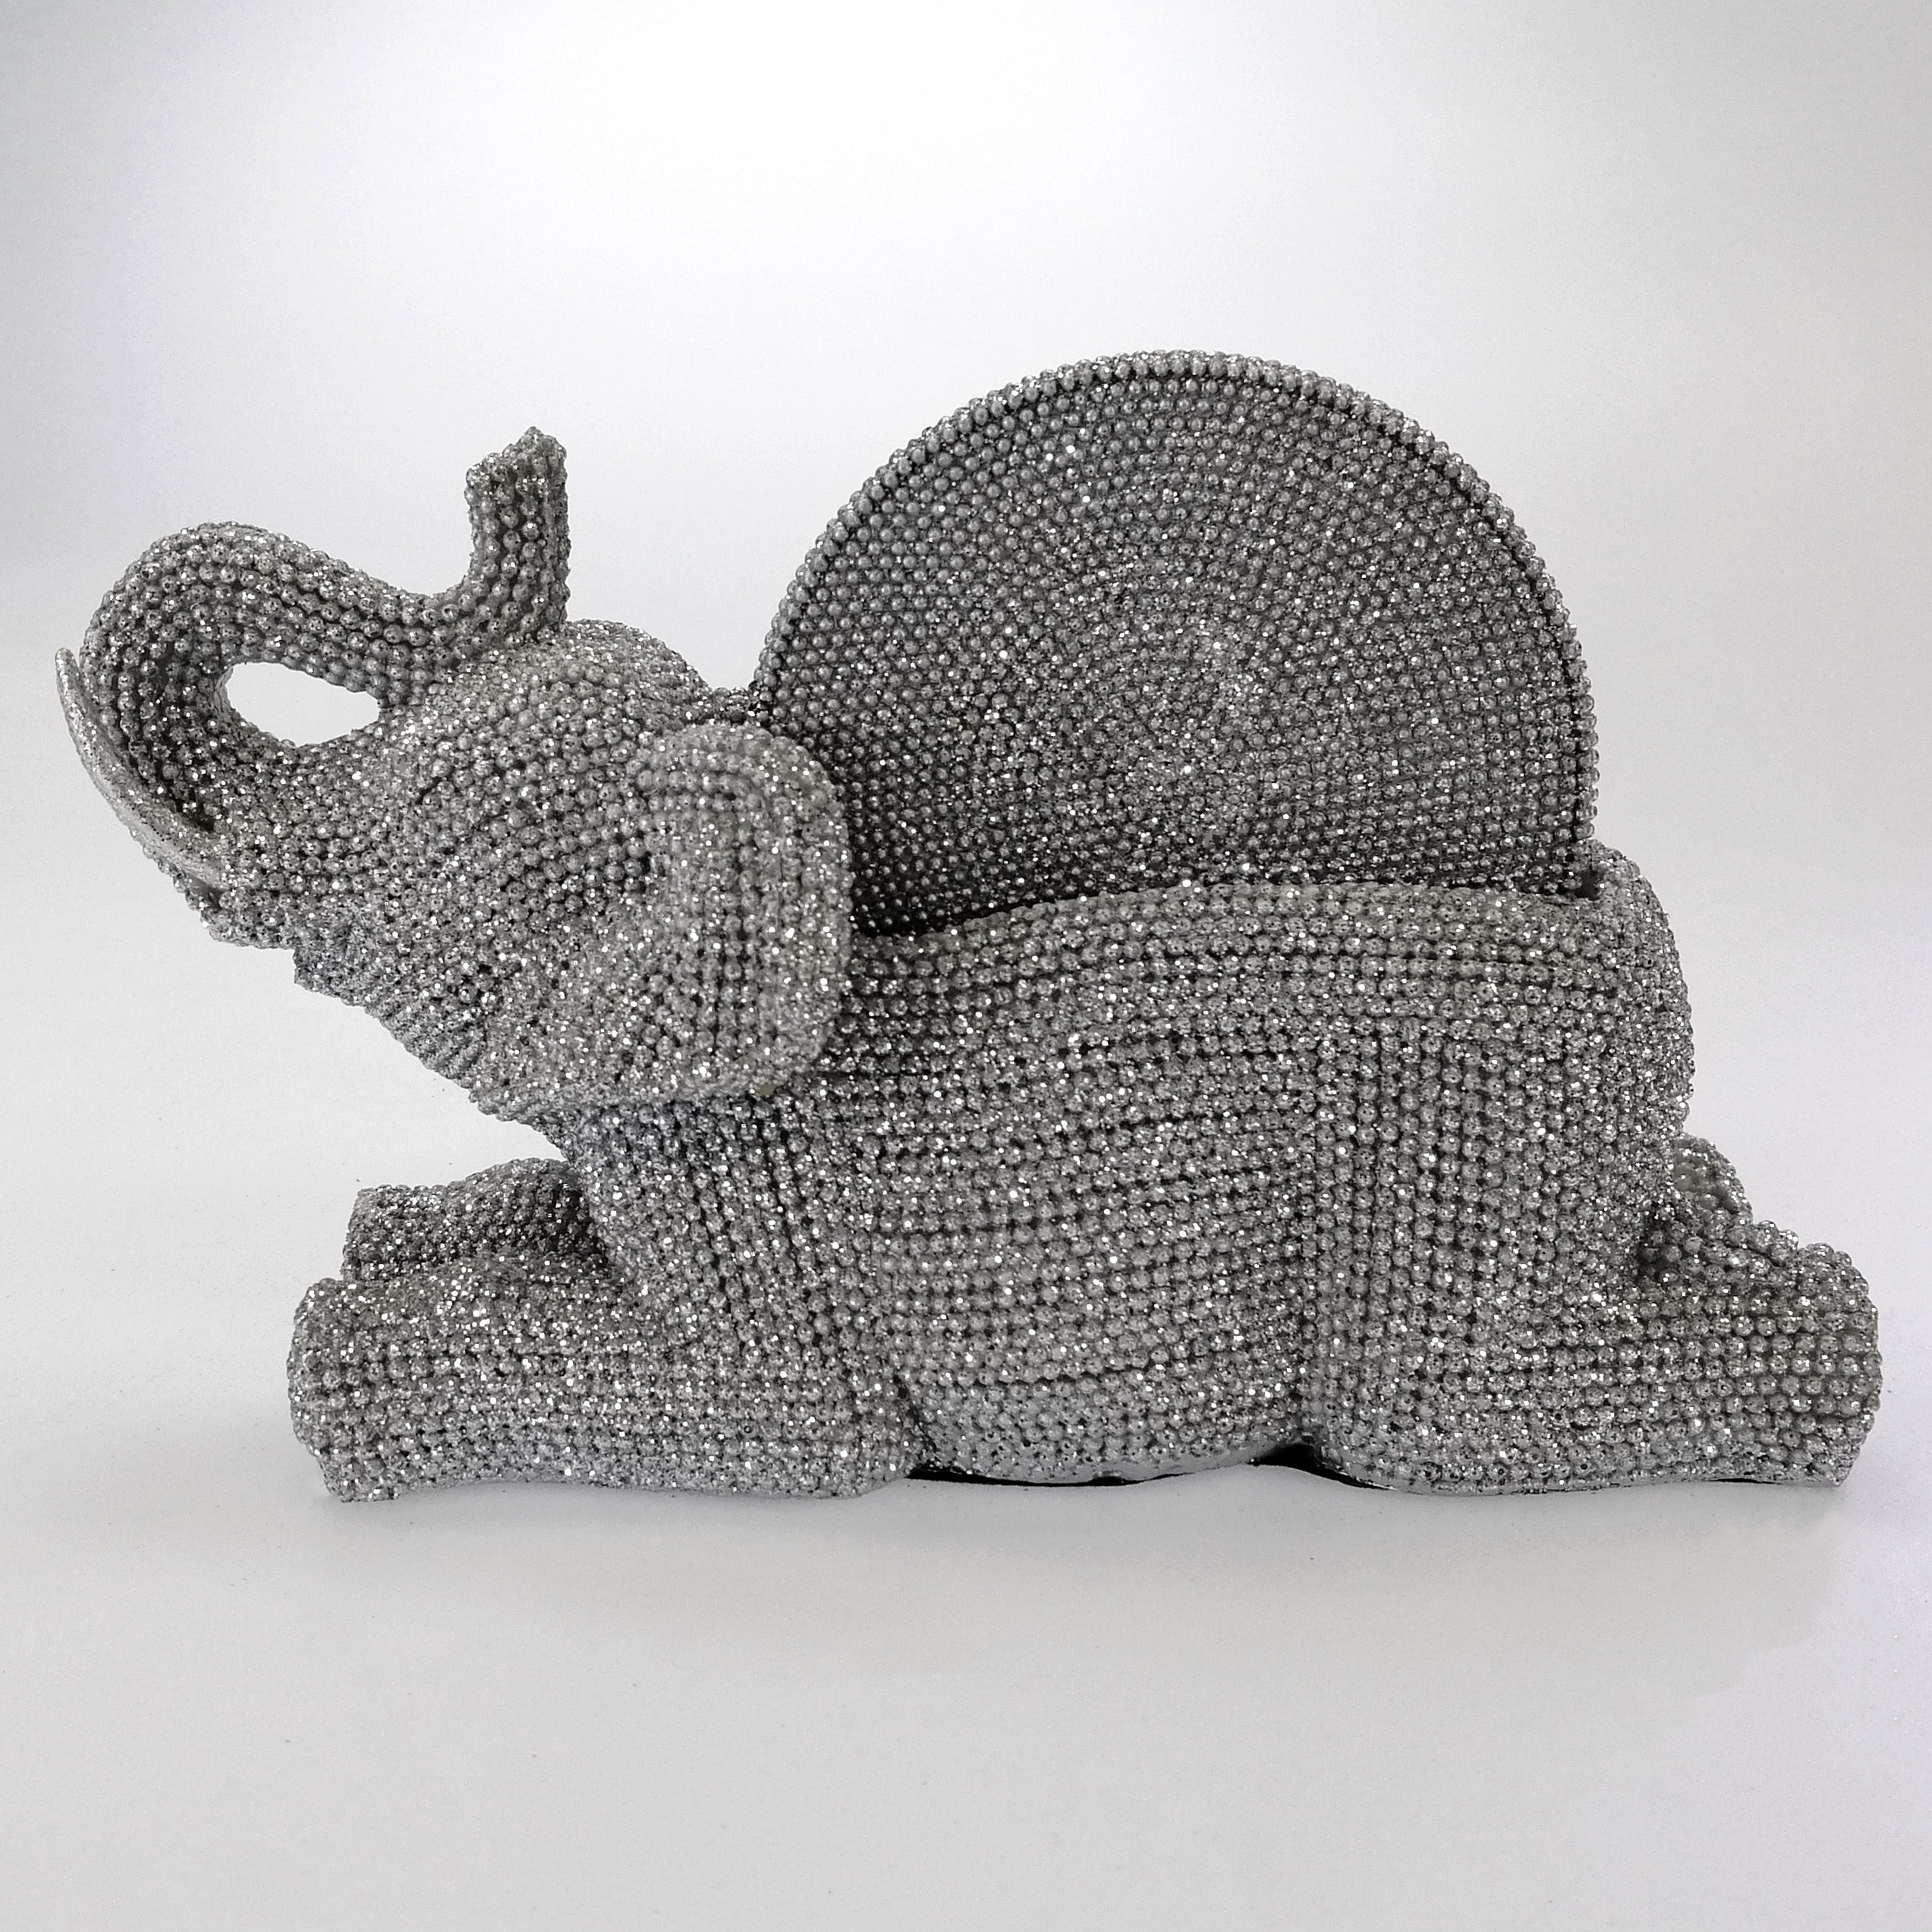 Silver-Look Studded Elephant & Coasters - Set of 4